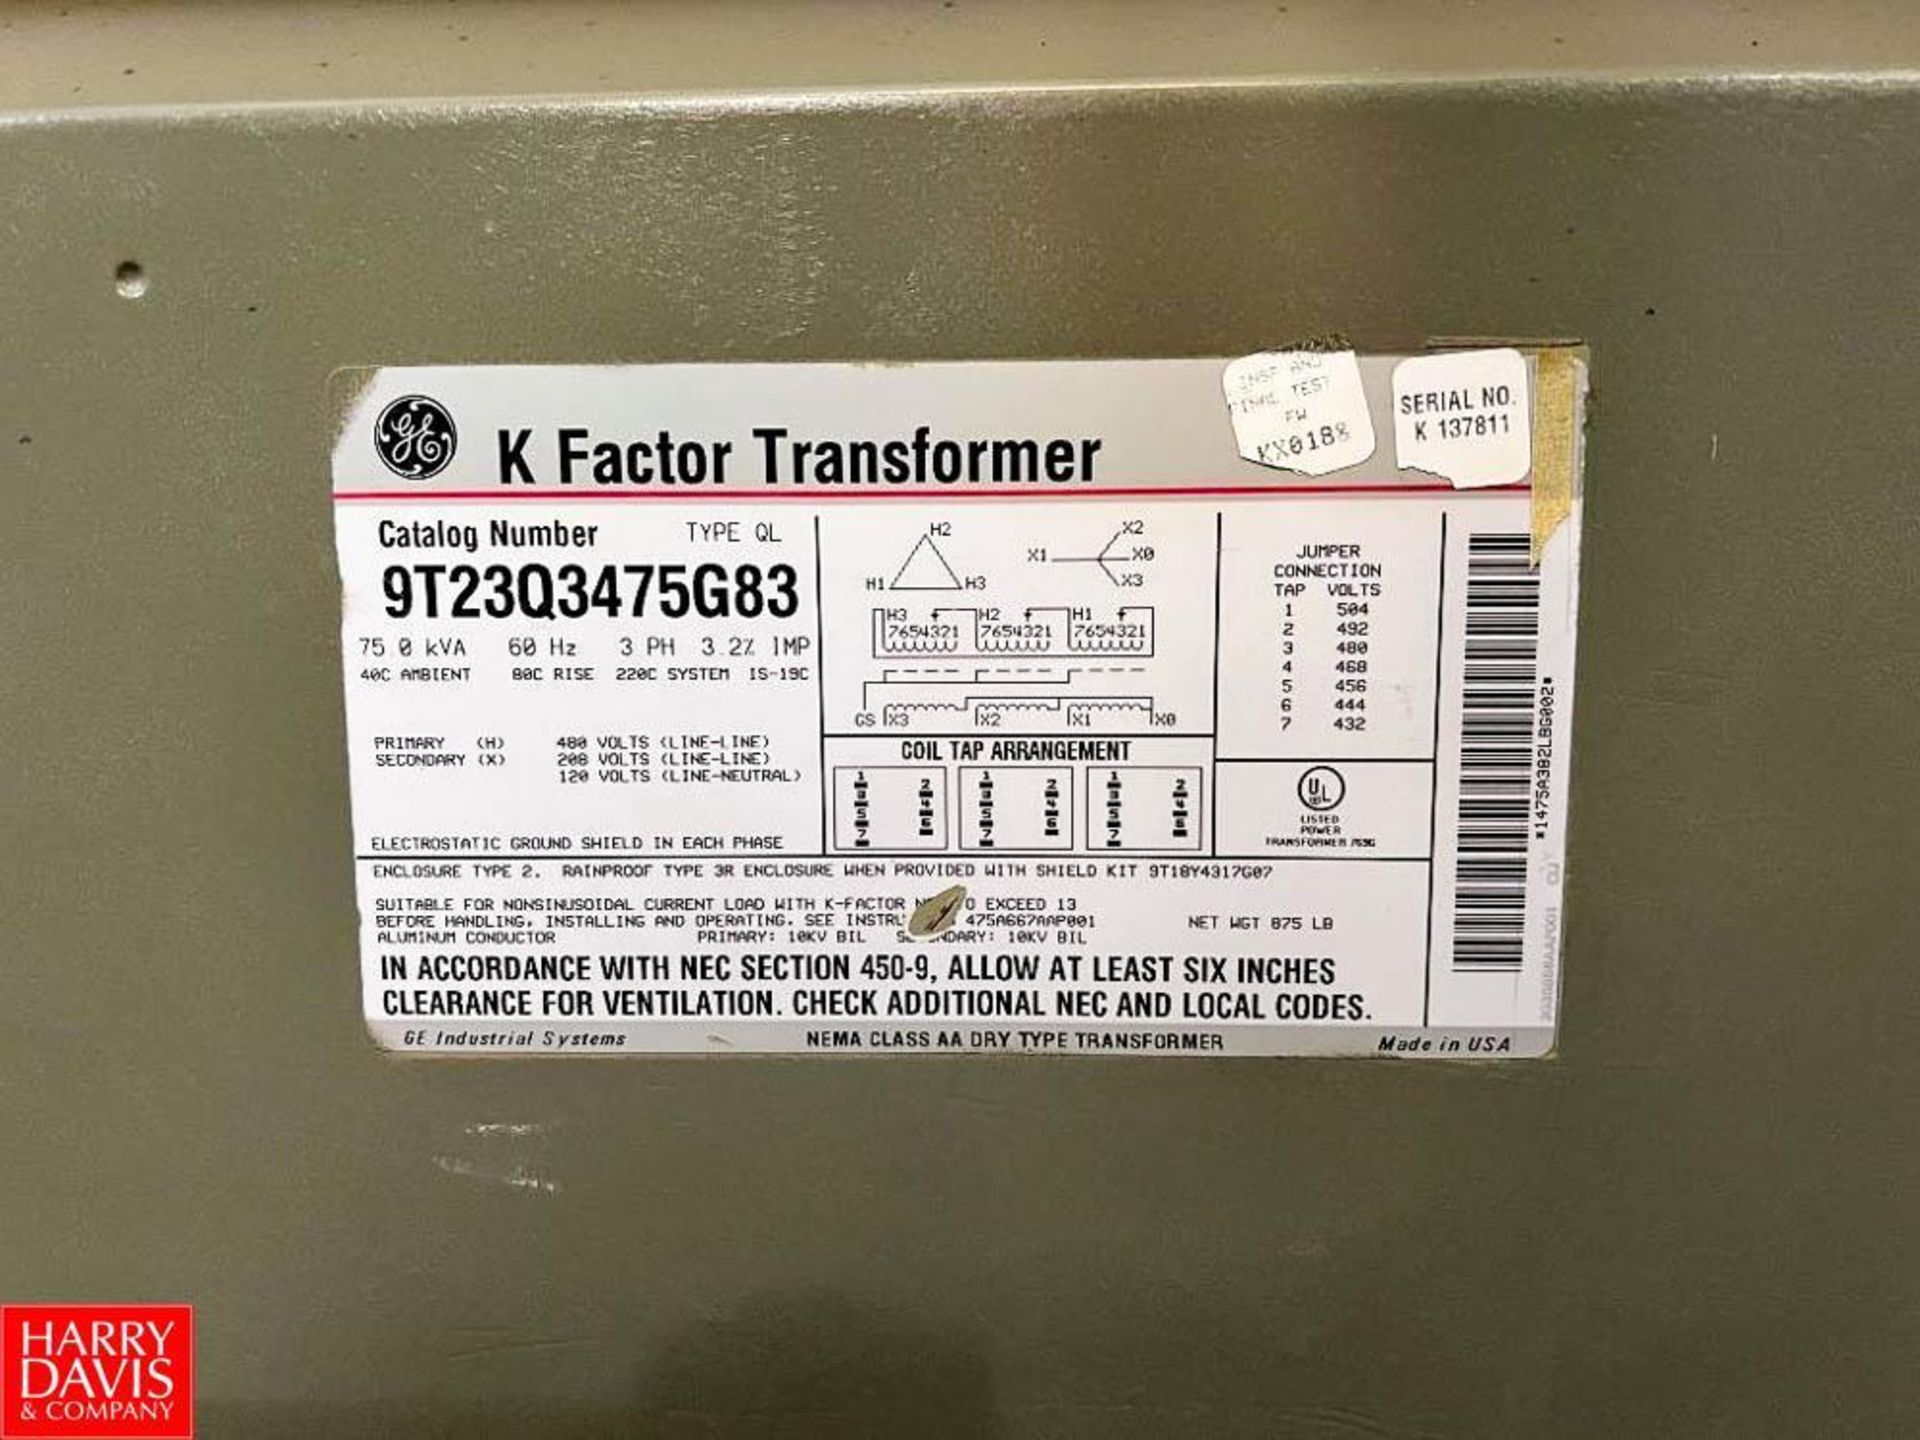 General Electric K Factor Transformer, Catalog Number: 9T23Q3475G83 (Location: Faribault, MN) - Image 2 of 2